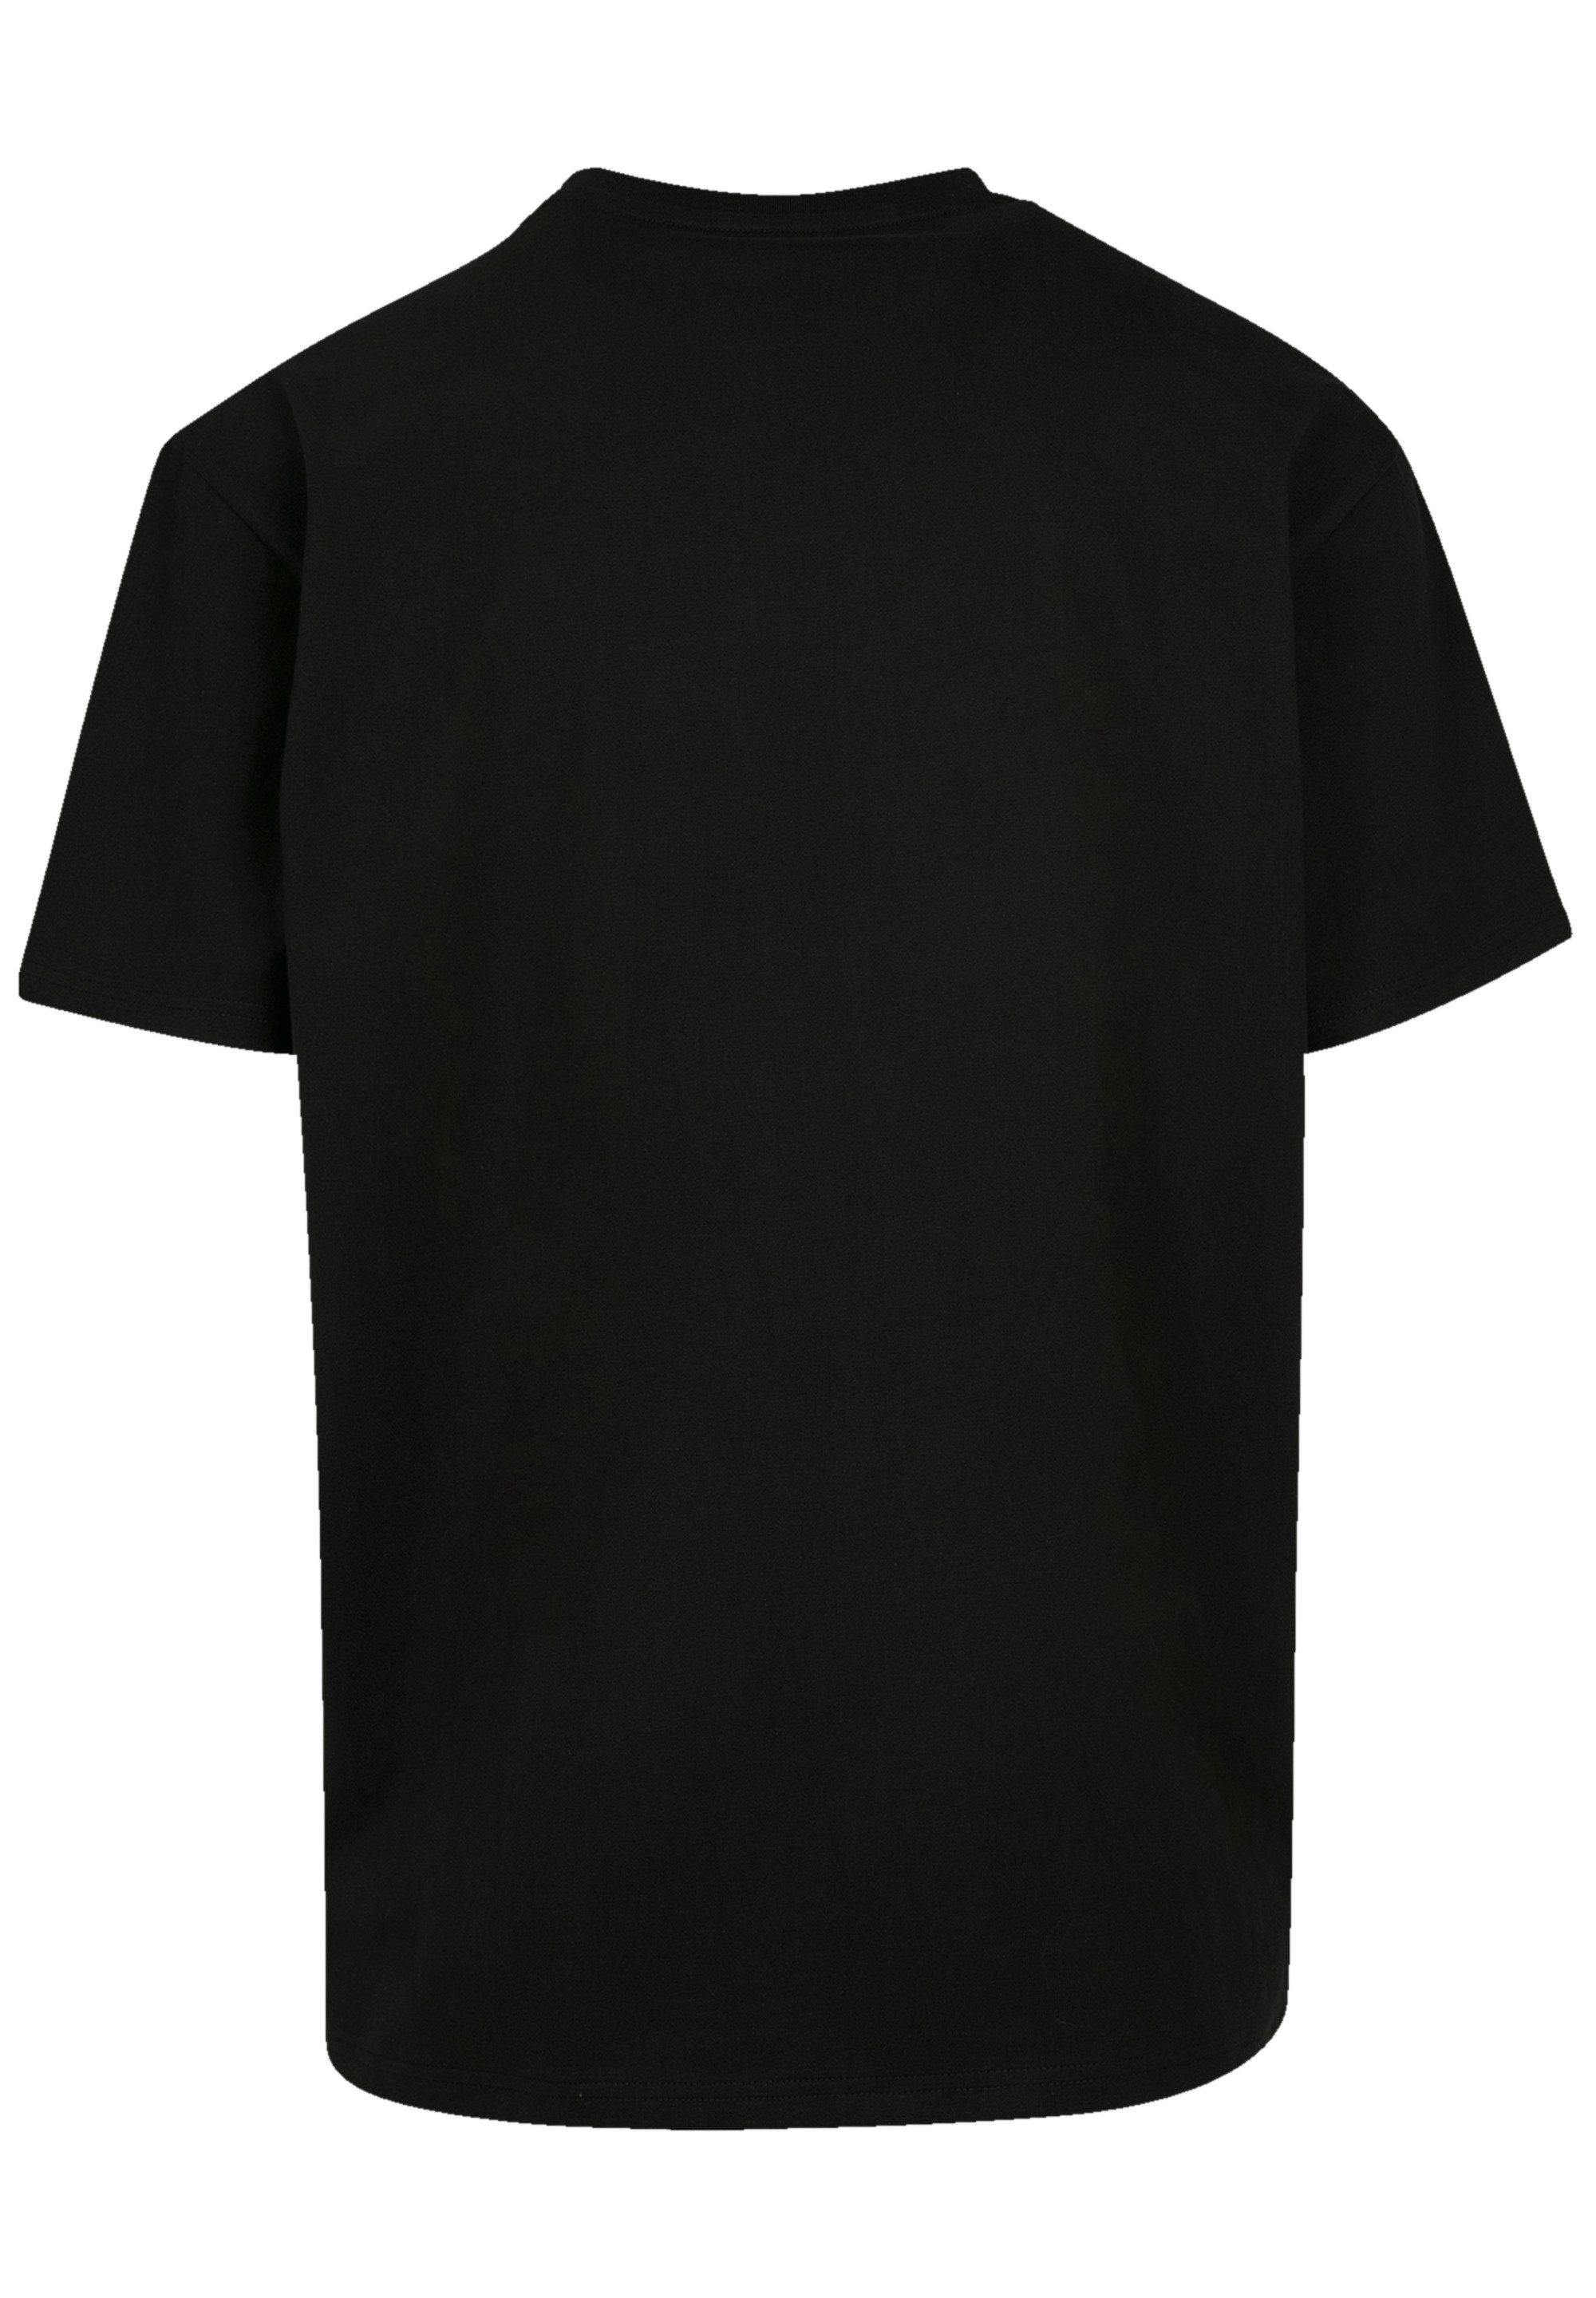 F4NT4STIC T-Shirt Disturbed schwarz Metal Rock-Musik, Band Heavy Evolving Qualität, Premium Creature